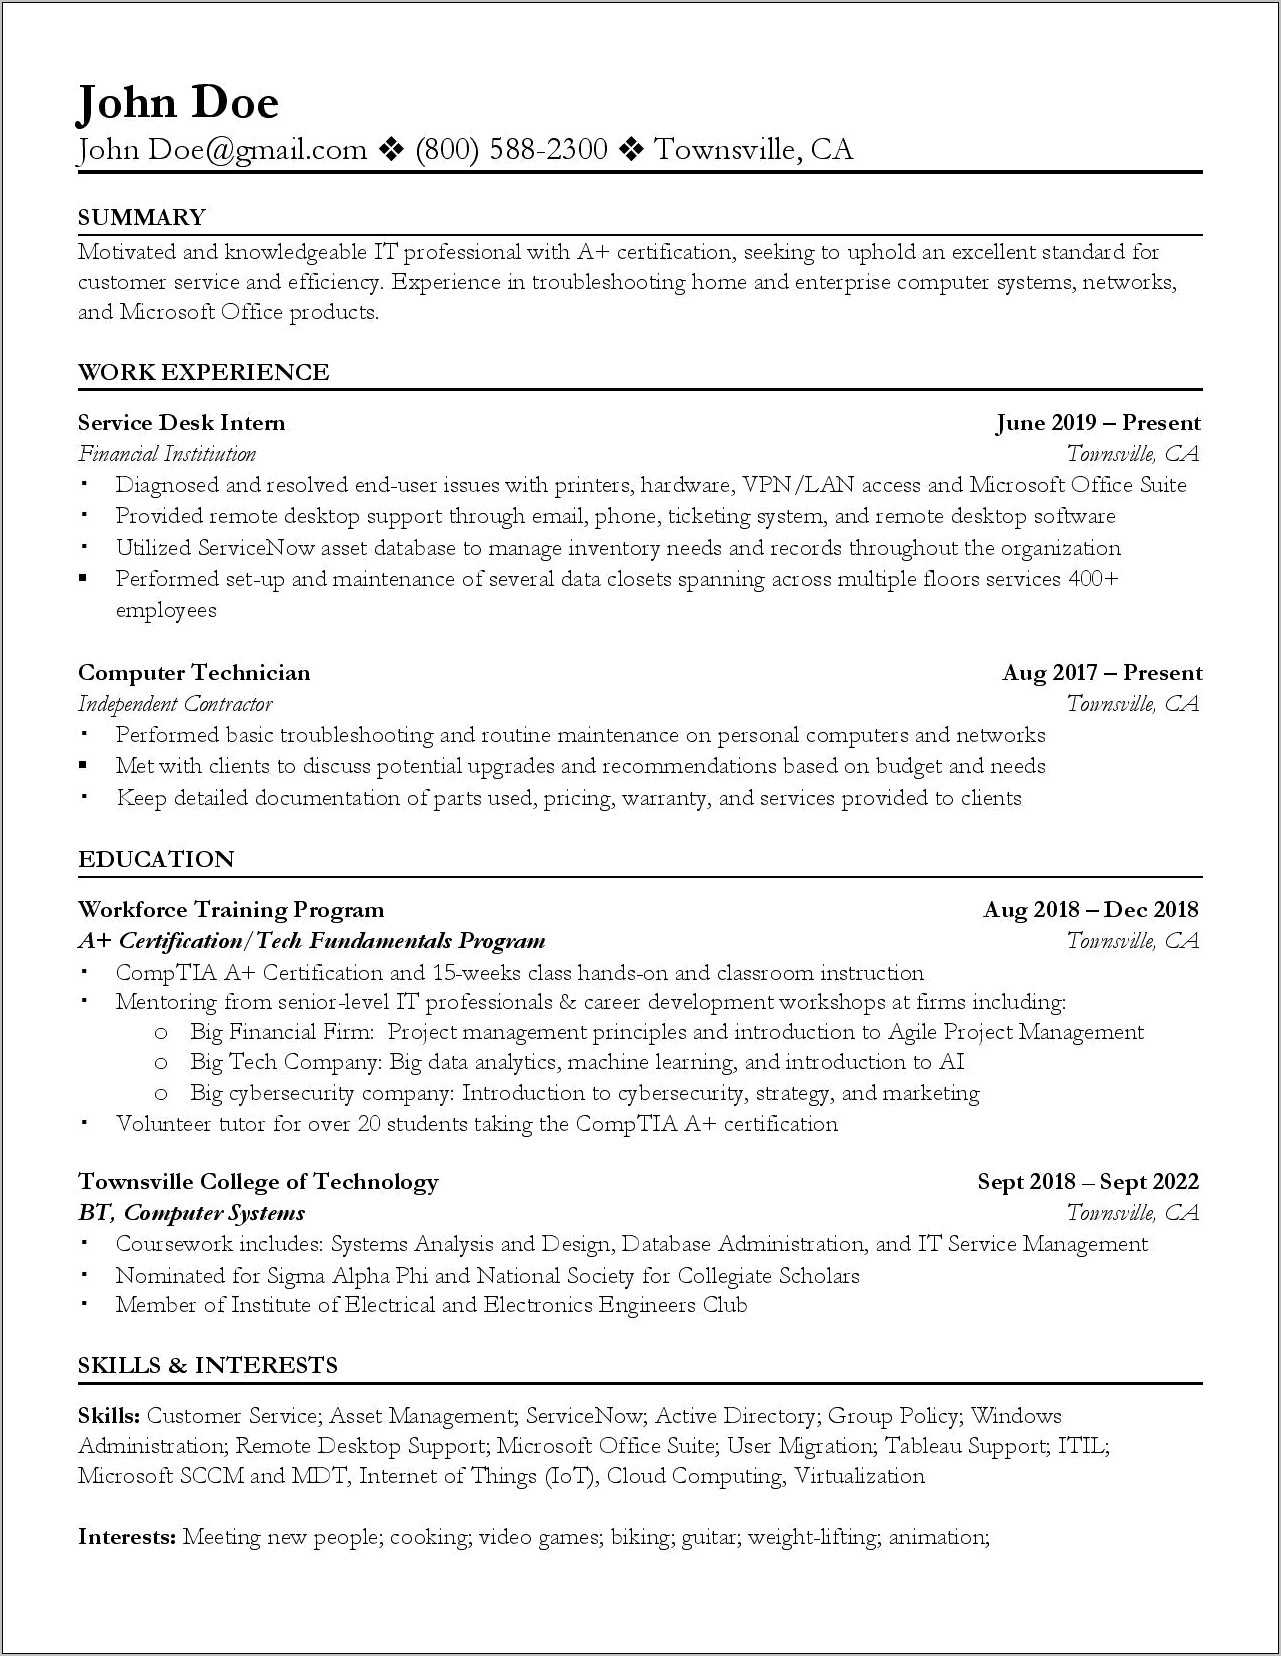 Resume Summary For Entry Level Help Desk